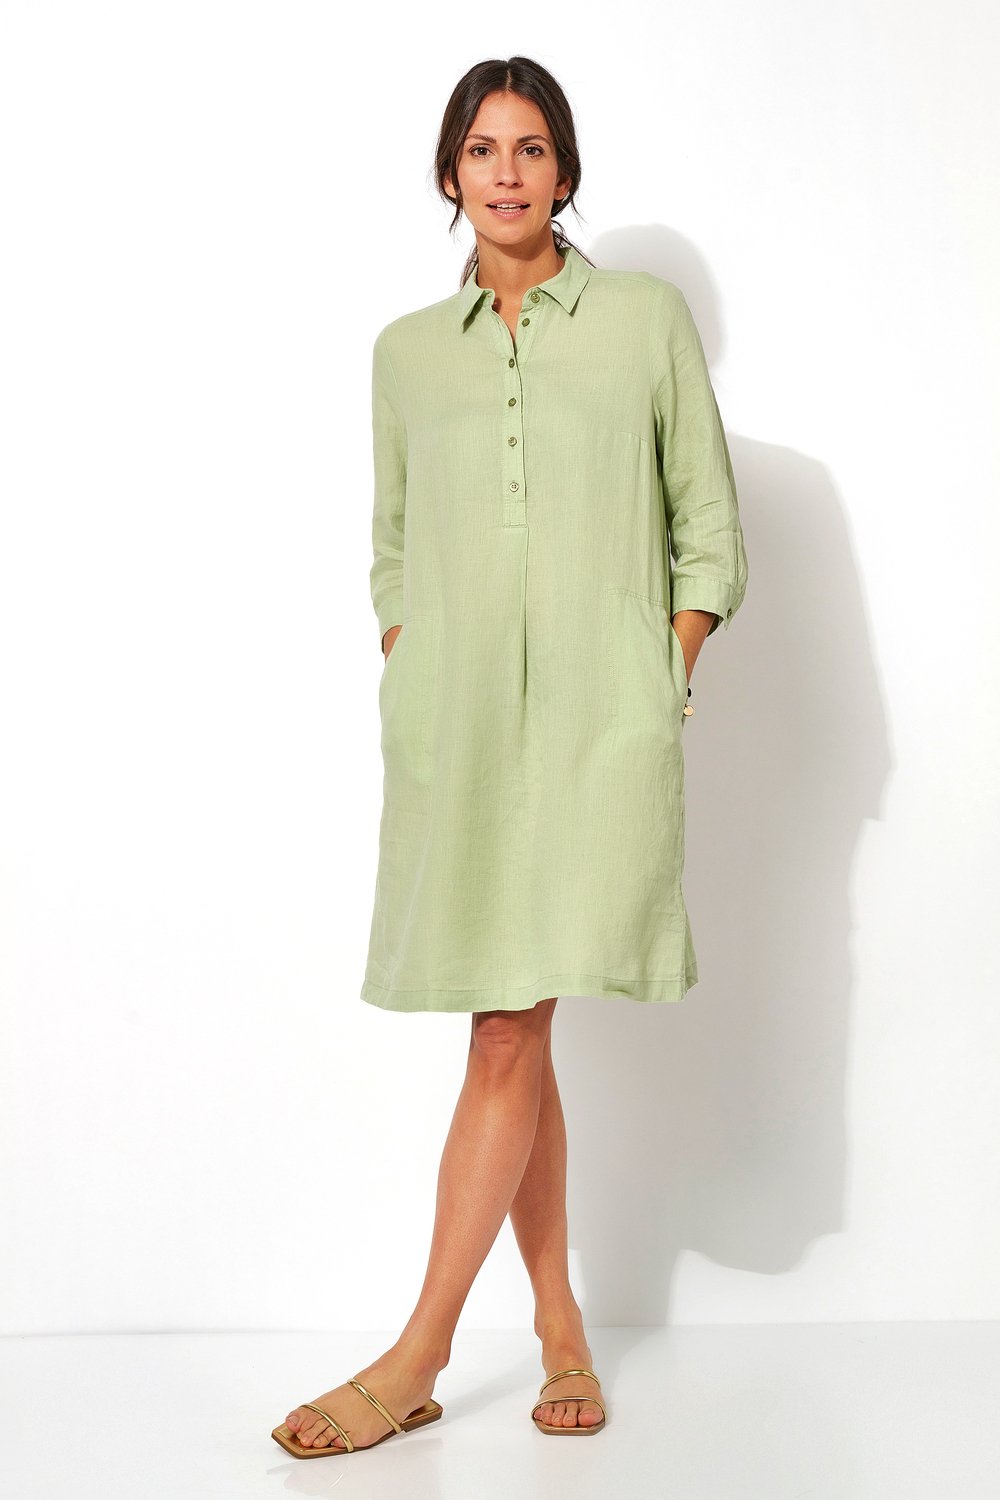 Relaxed linen dress | Style »Aila« soft khaki